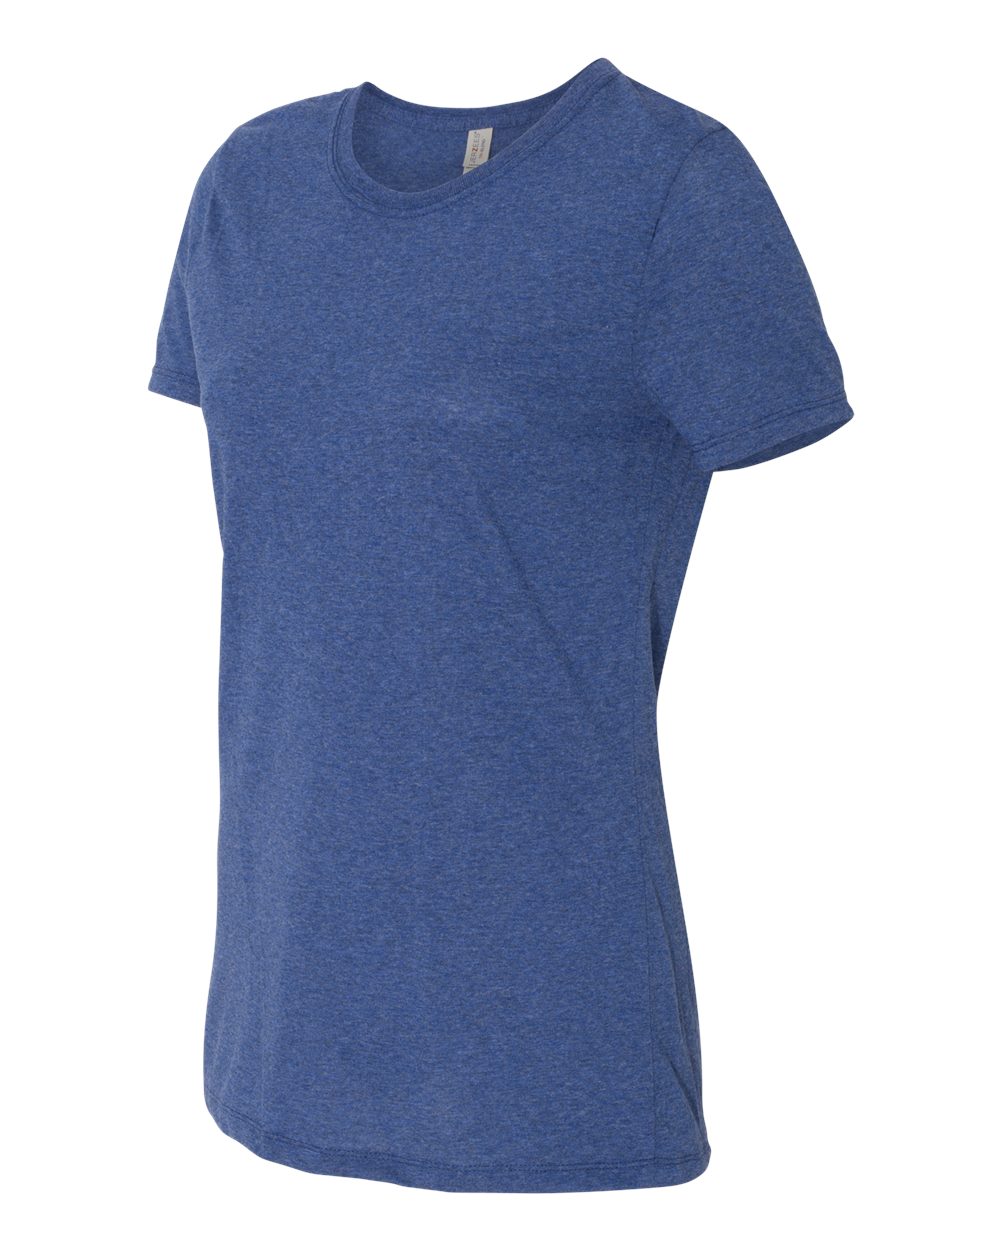 Jerzees 601WR - Dri-Power Active Triblend T-Shirt $4.22 - T-Shirts